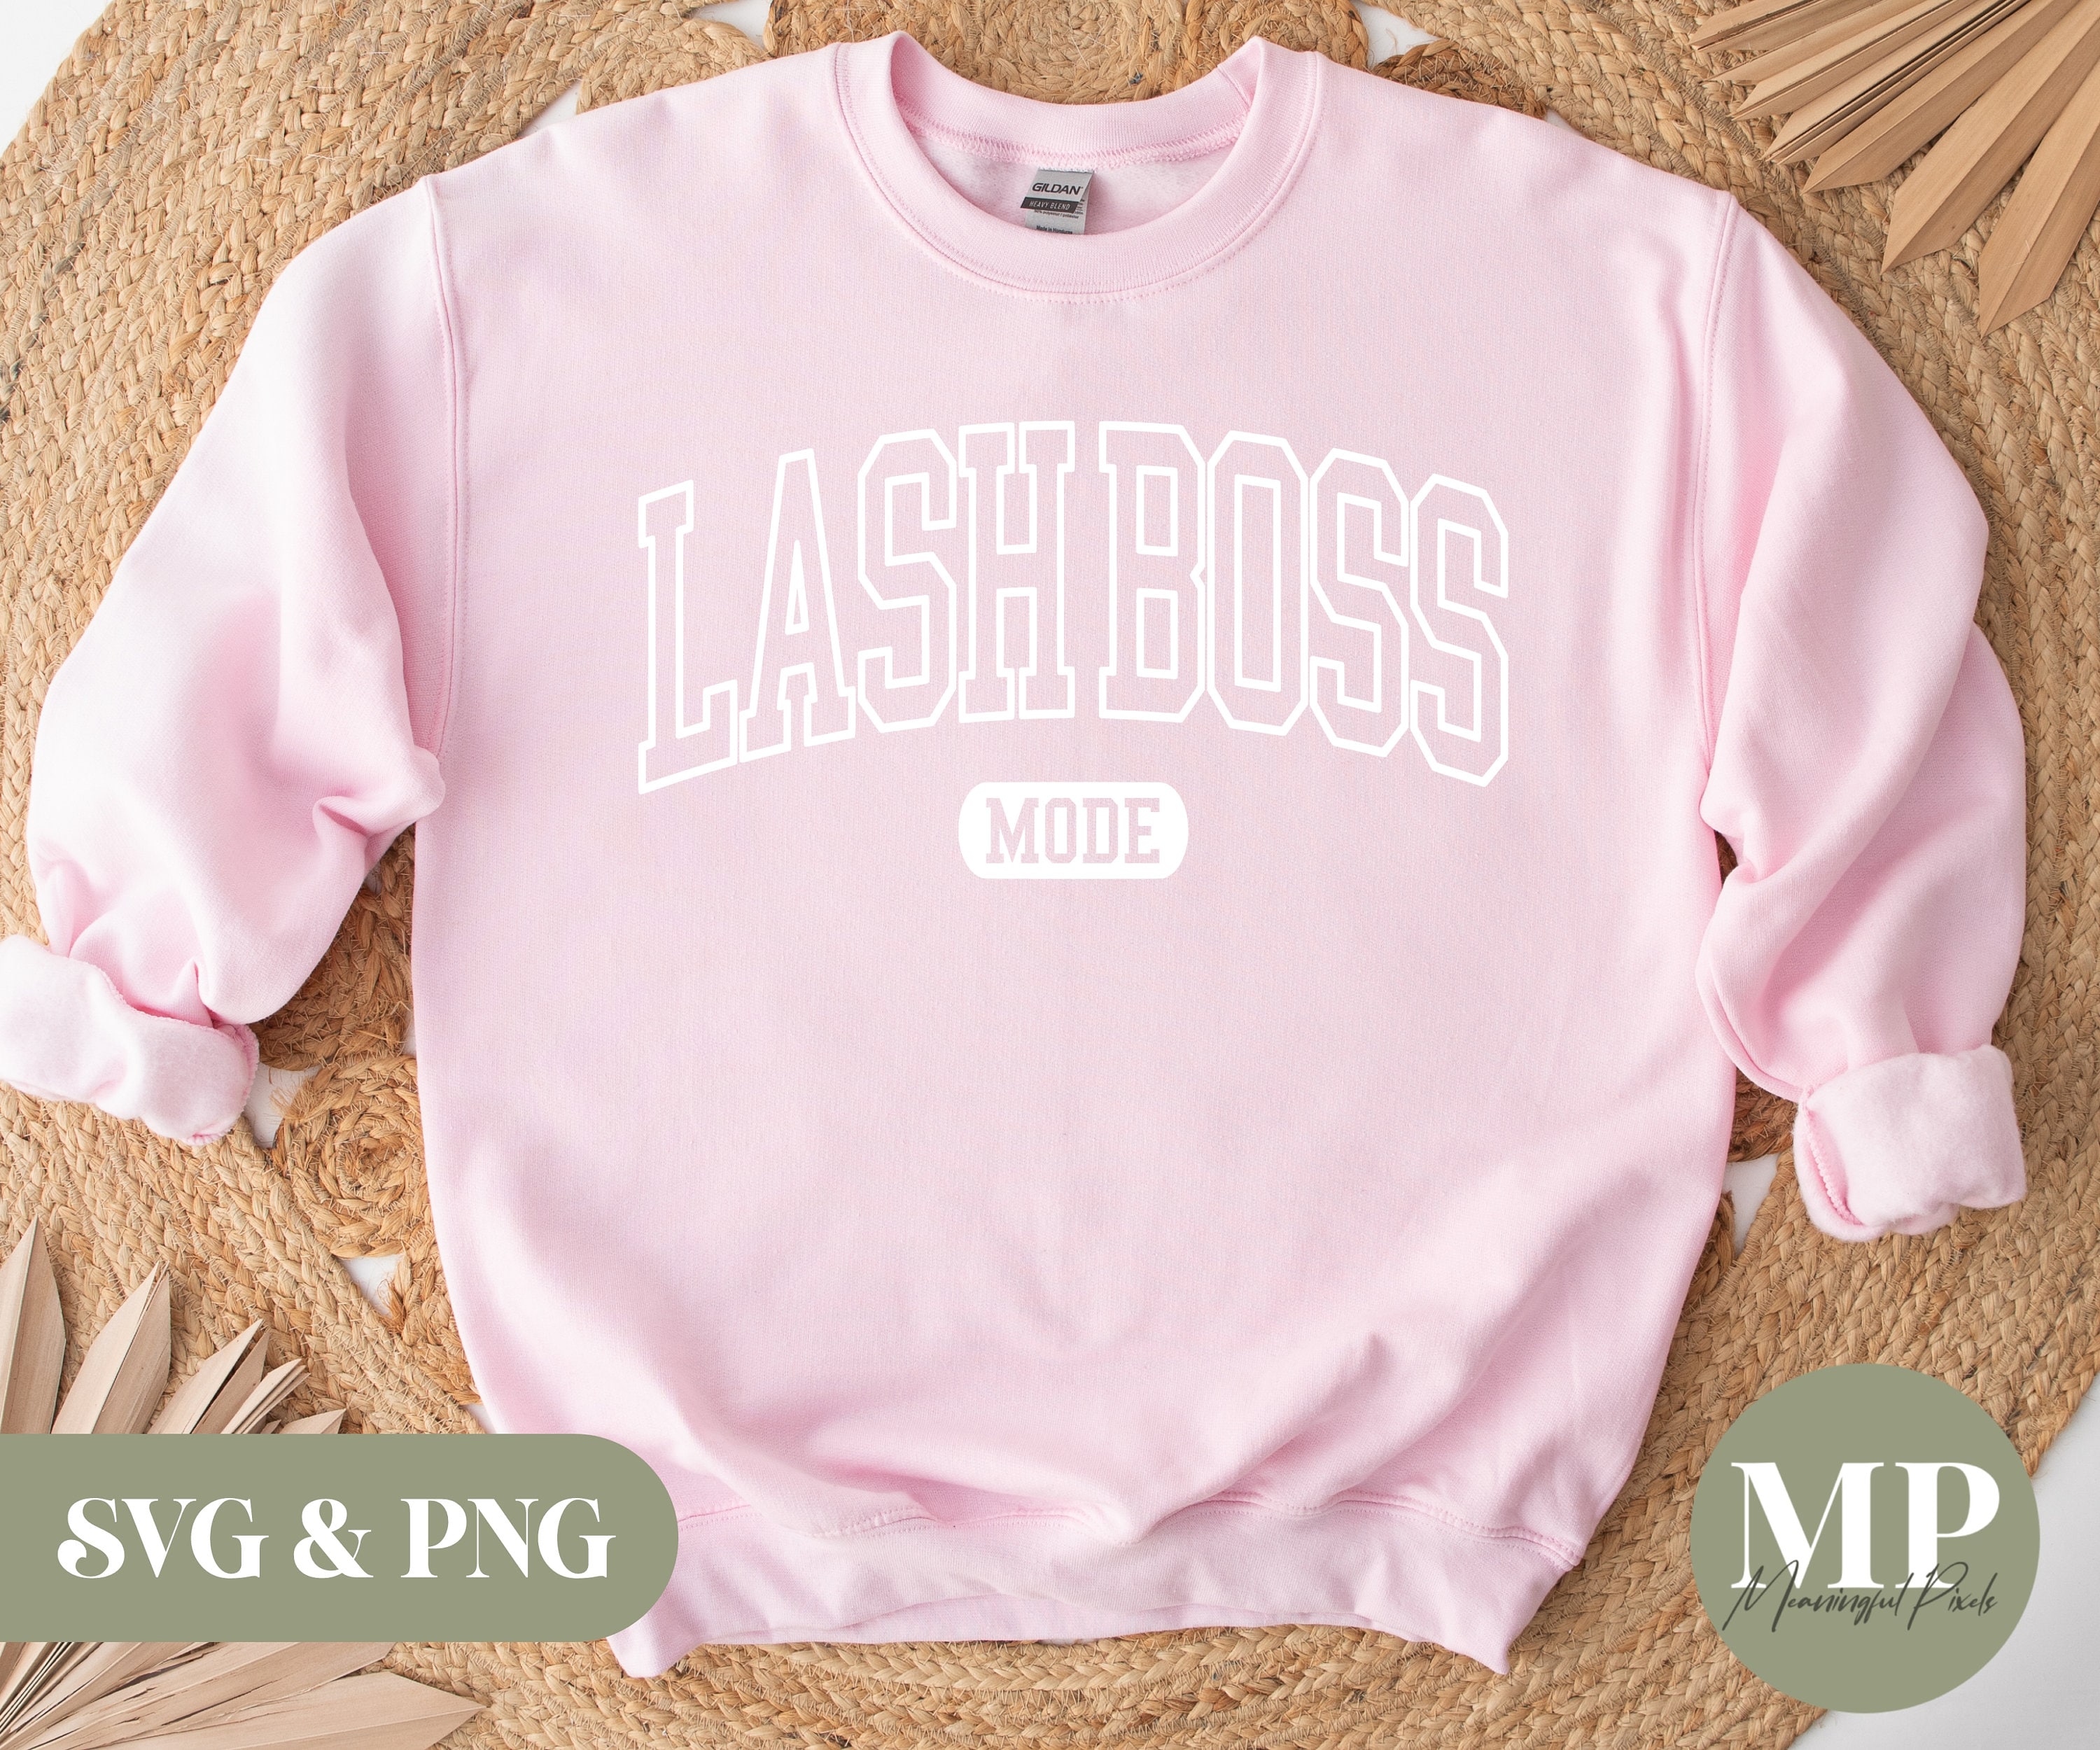 The Best Lash Tech Calls Me Mom Women's Sweatshirt — Lancaster's Luxe Lashes